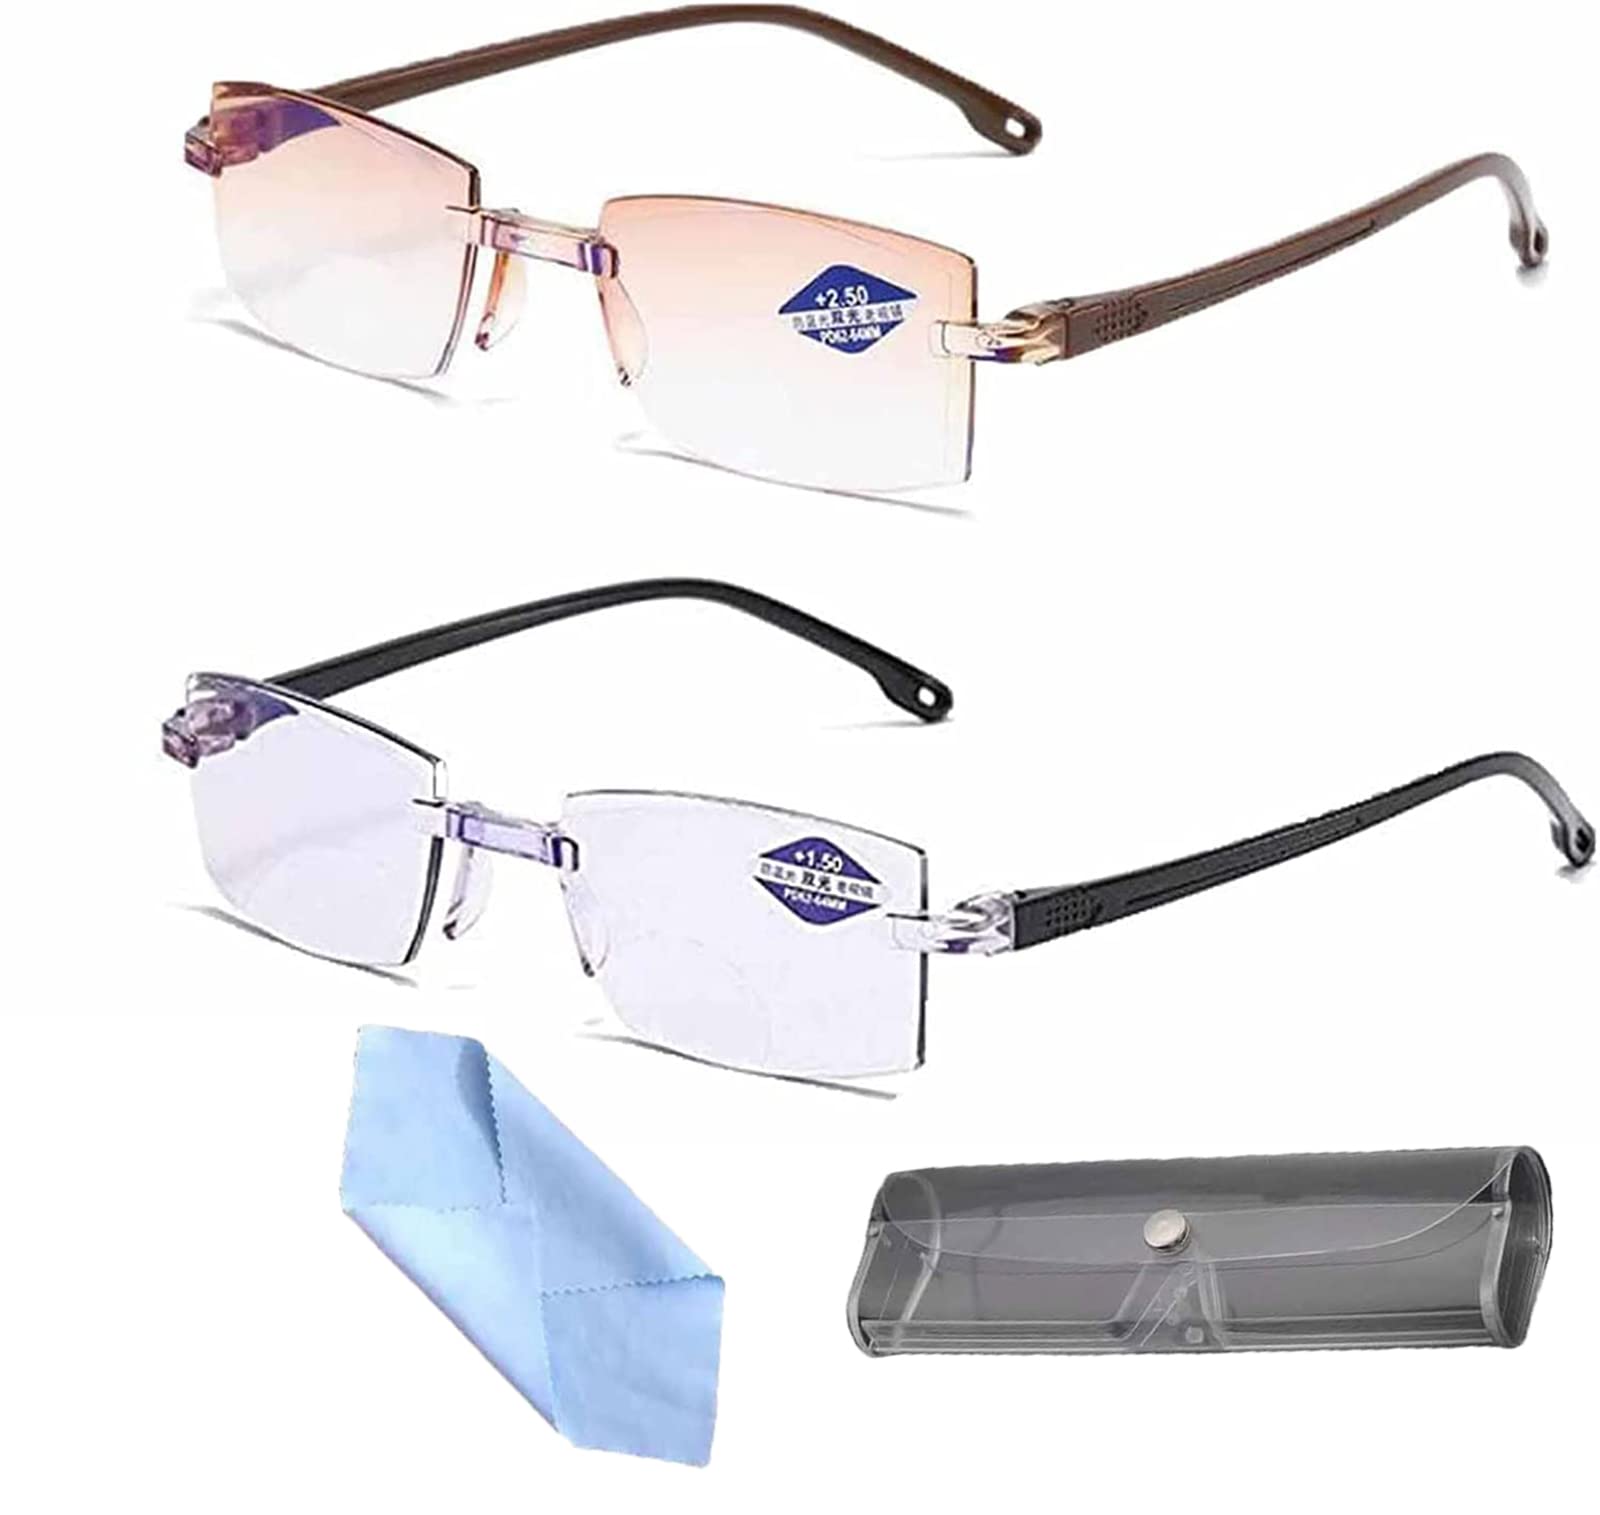 Hilipert Intelligent Reading Glasses Reviews 2023: Is Hilipert Intelligent Reading Glasses Legt?